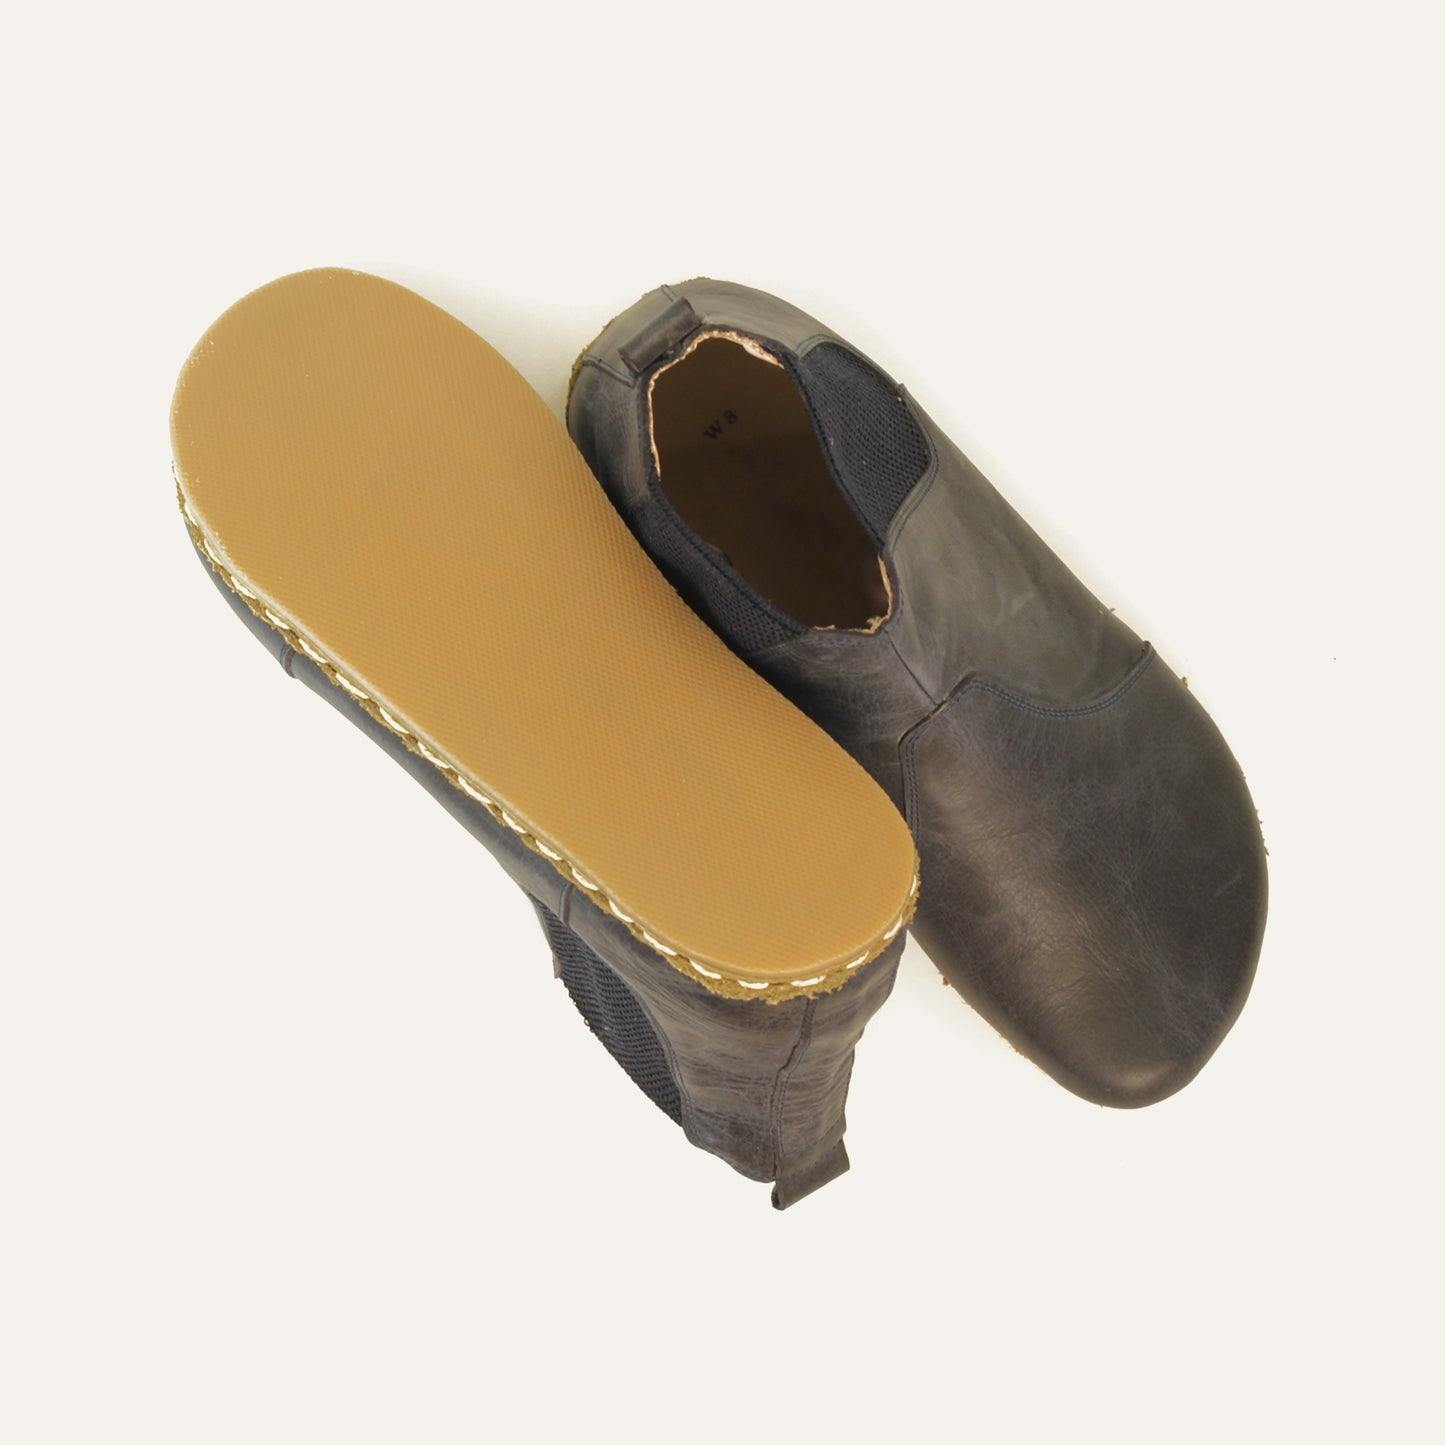 CHELSEA Barefoot Boots, Zero Drop, Handmade, FOR WOMEN, Crazy Navy Blue Genuine Leather